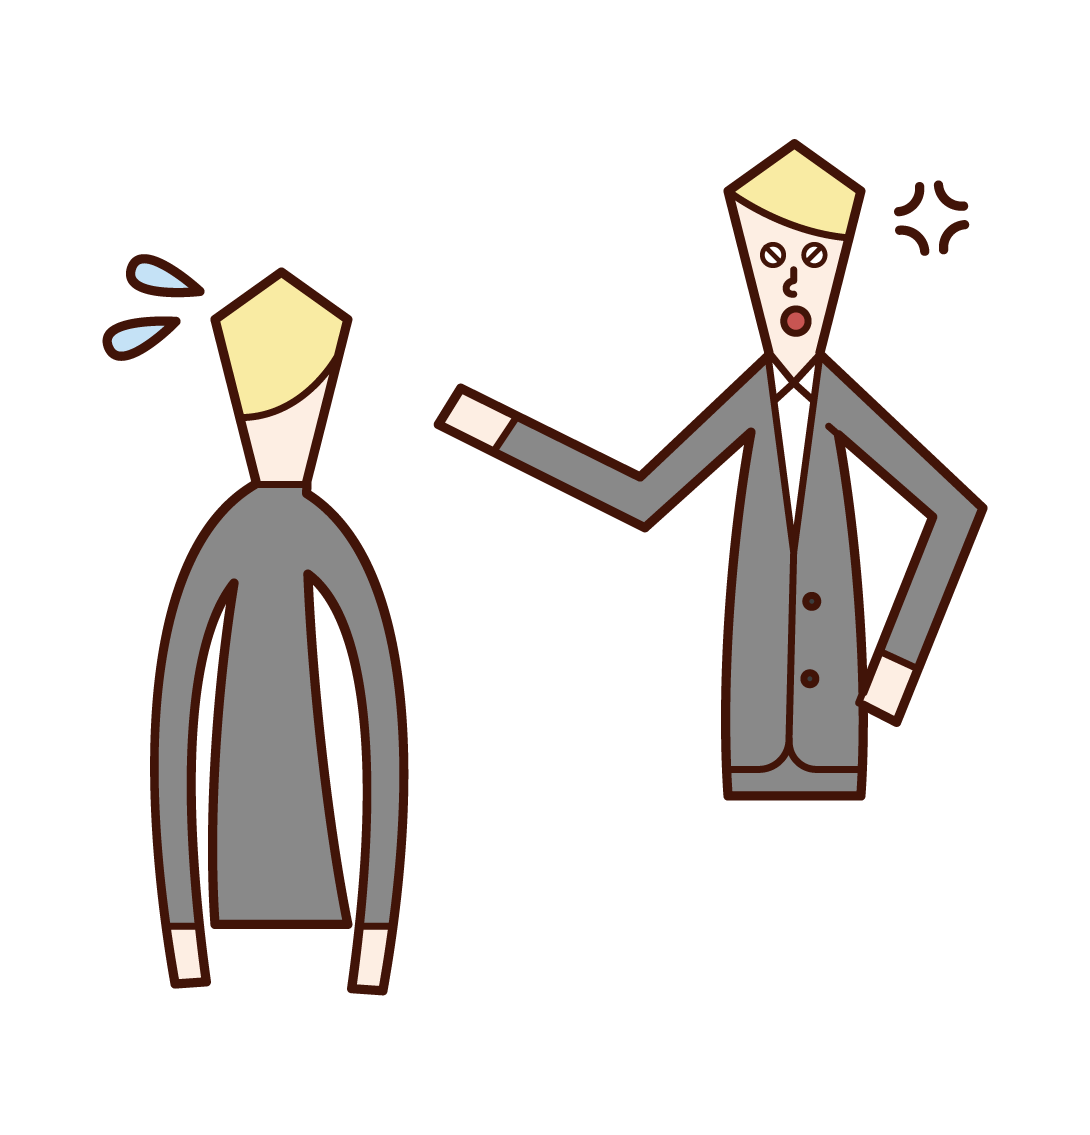 Illustration of a boss (man) rebuking his subordinates